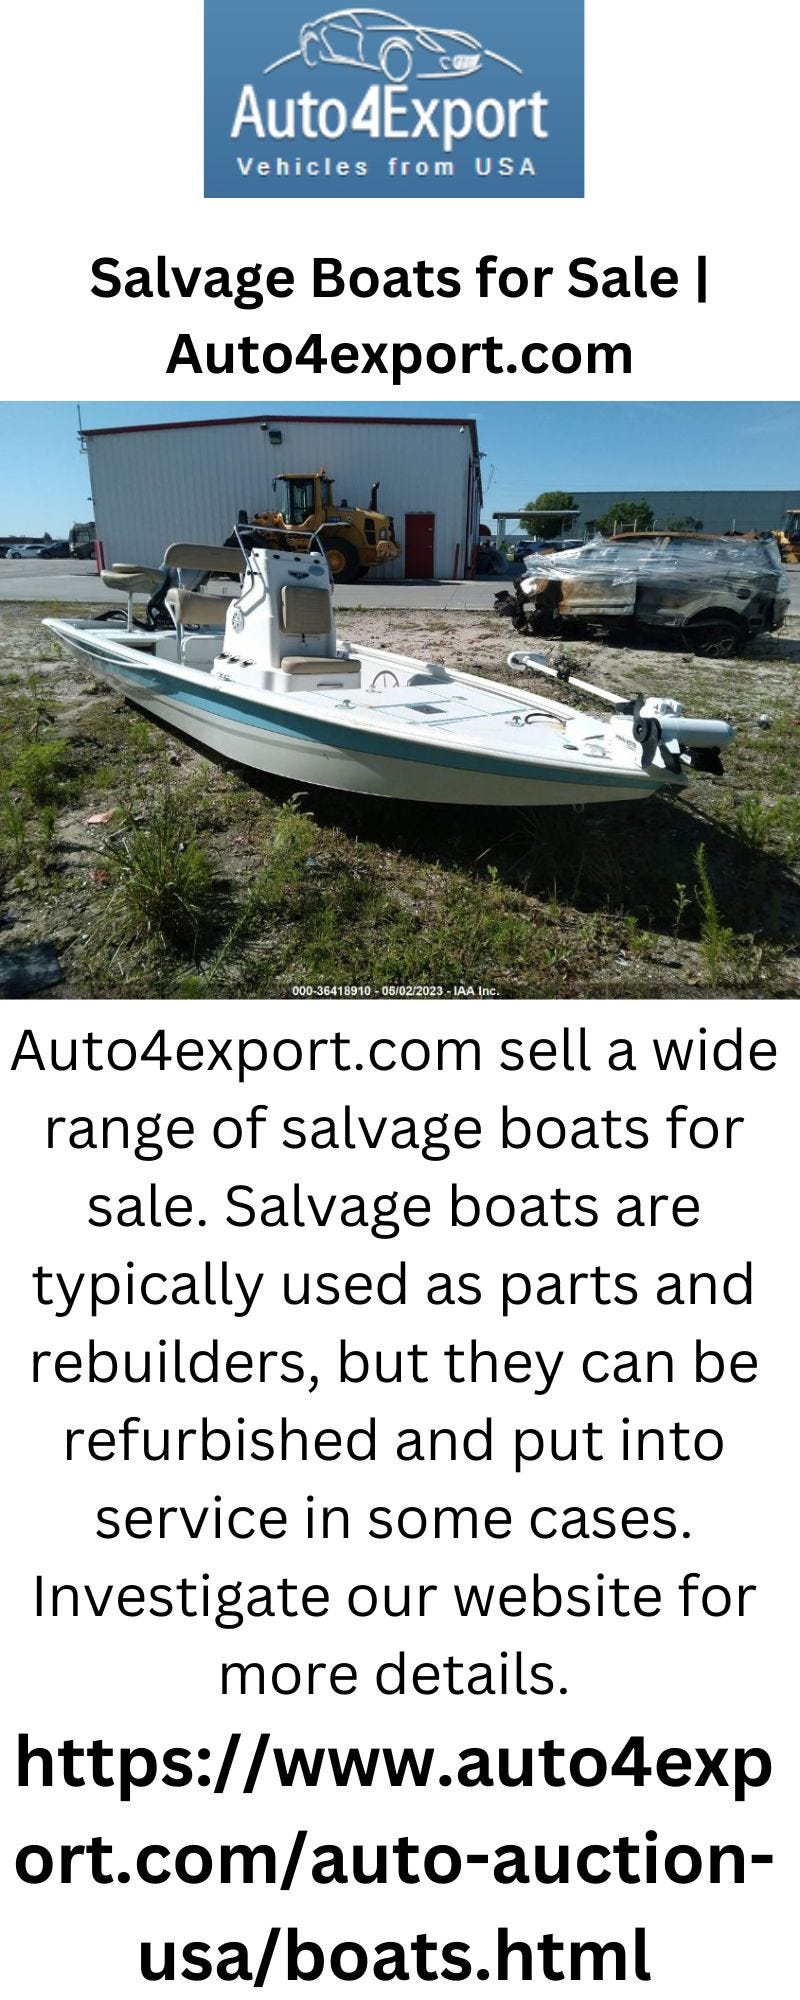 Salvage Cars for Sale  Auto4export.com - Autoexport - Medium